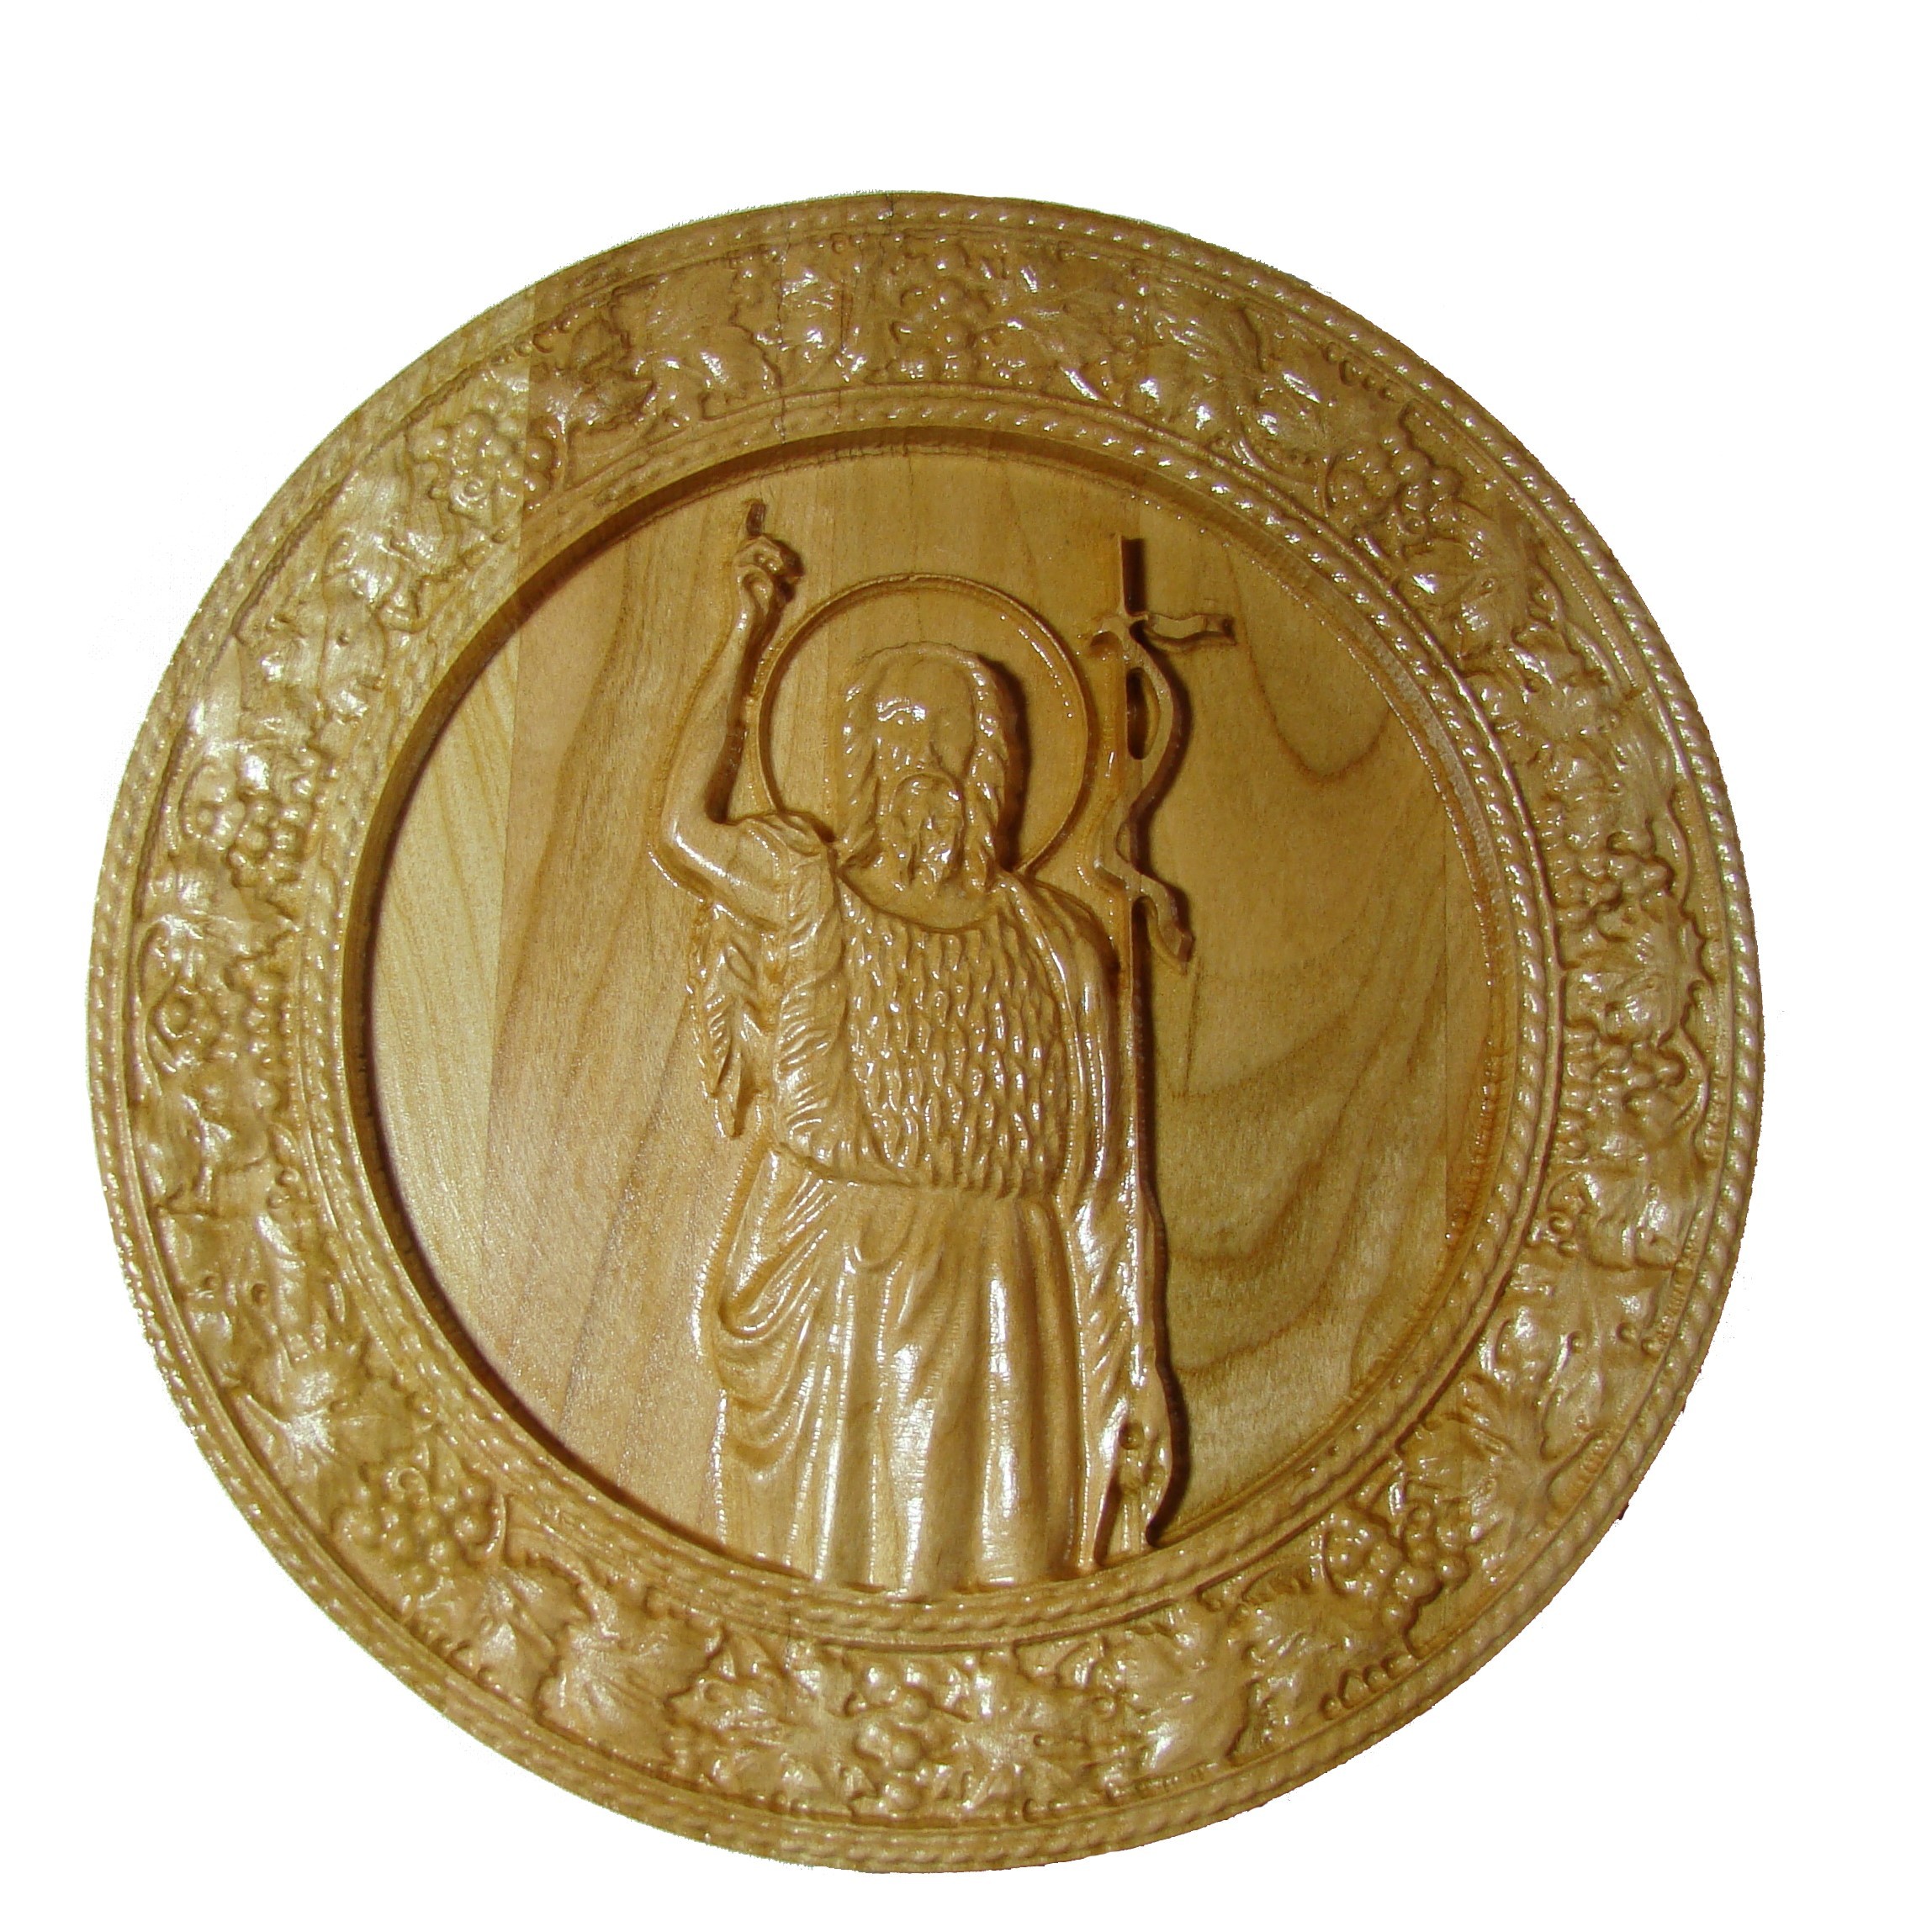 Icoana sculptata Sfantul Ioan Botezatorul, lemn masiv, cires salbatic, rama circulara vita-de-vie, diametru 19.5 cm